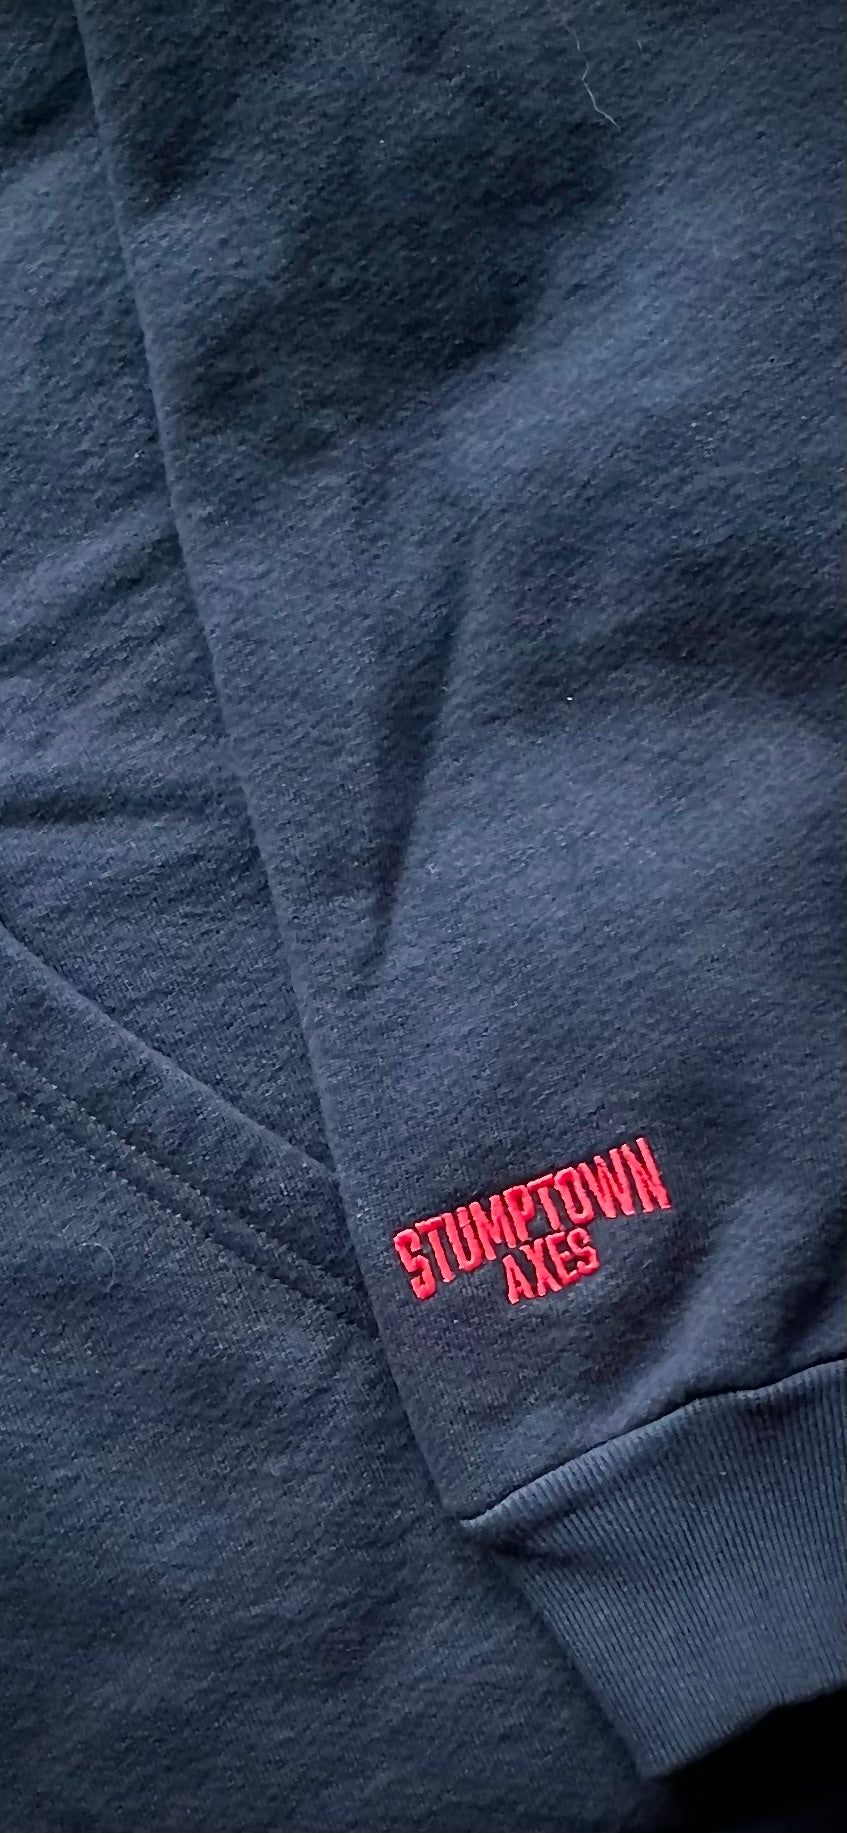 Stumptown Axes Zip-Up Hoodie - Embroidery